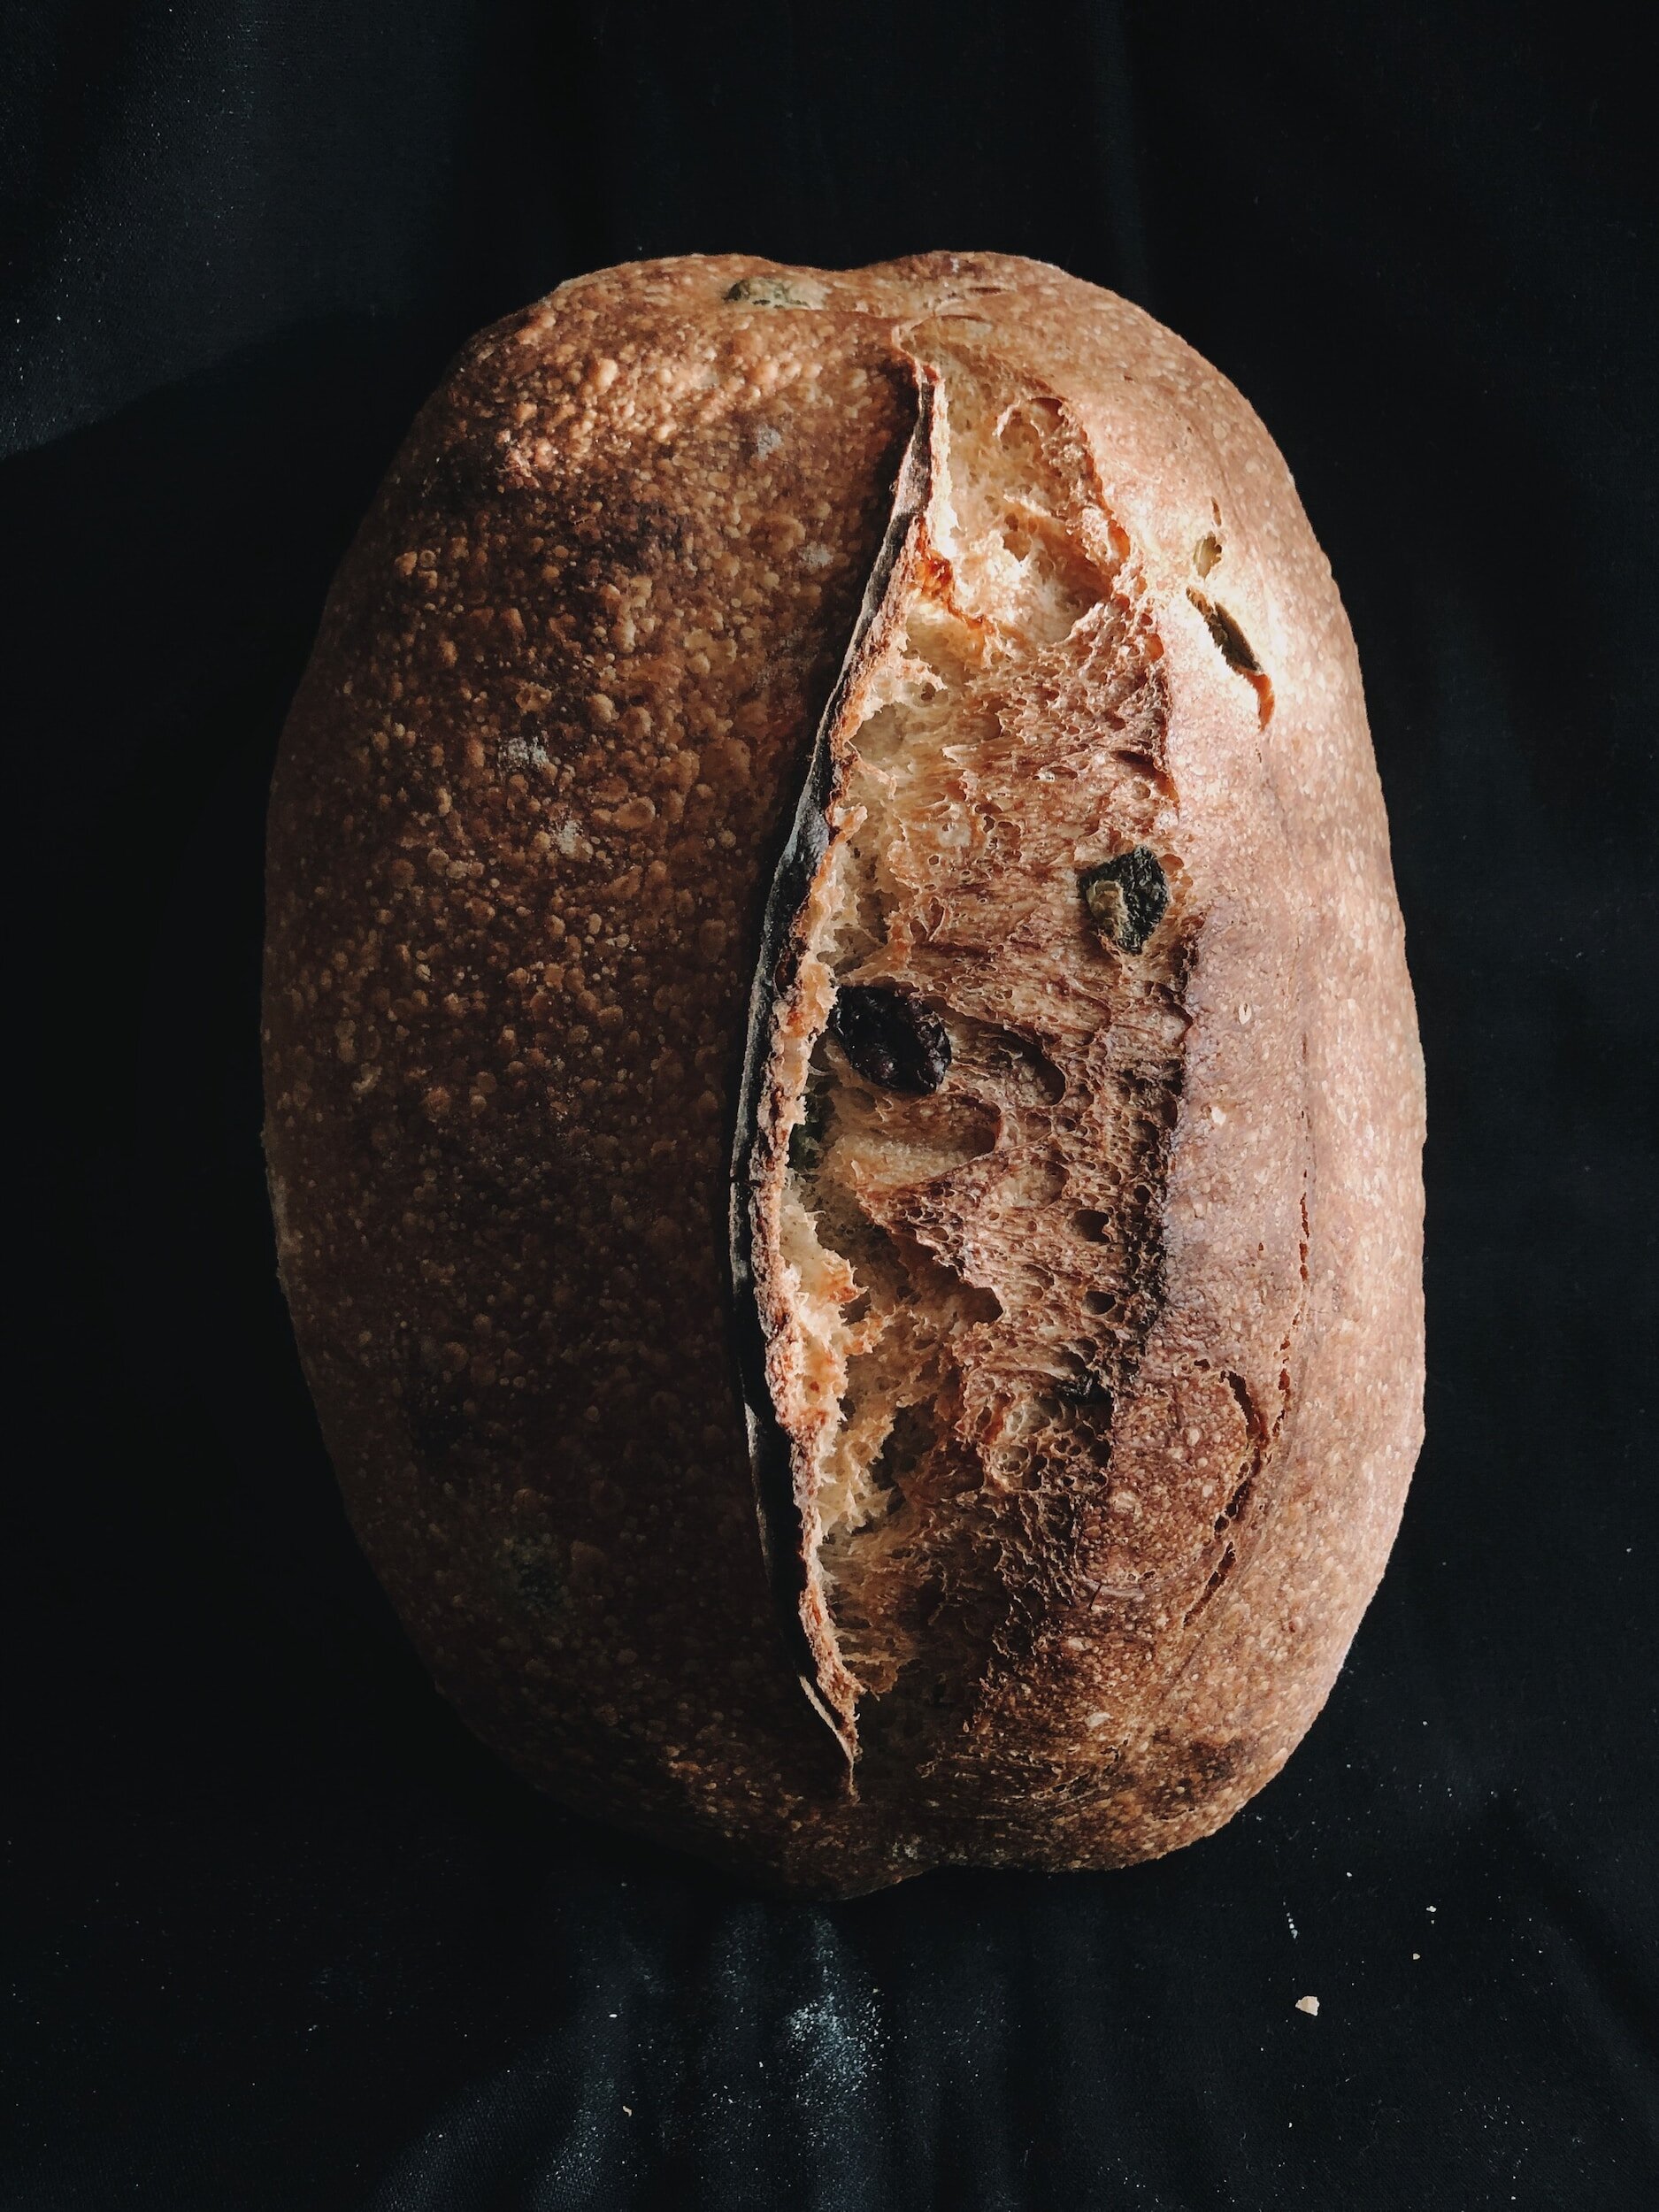 Italian bread loaf